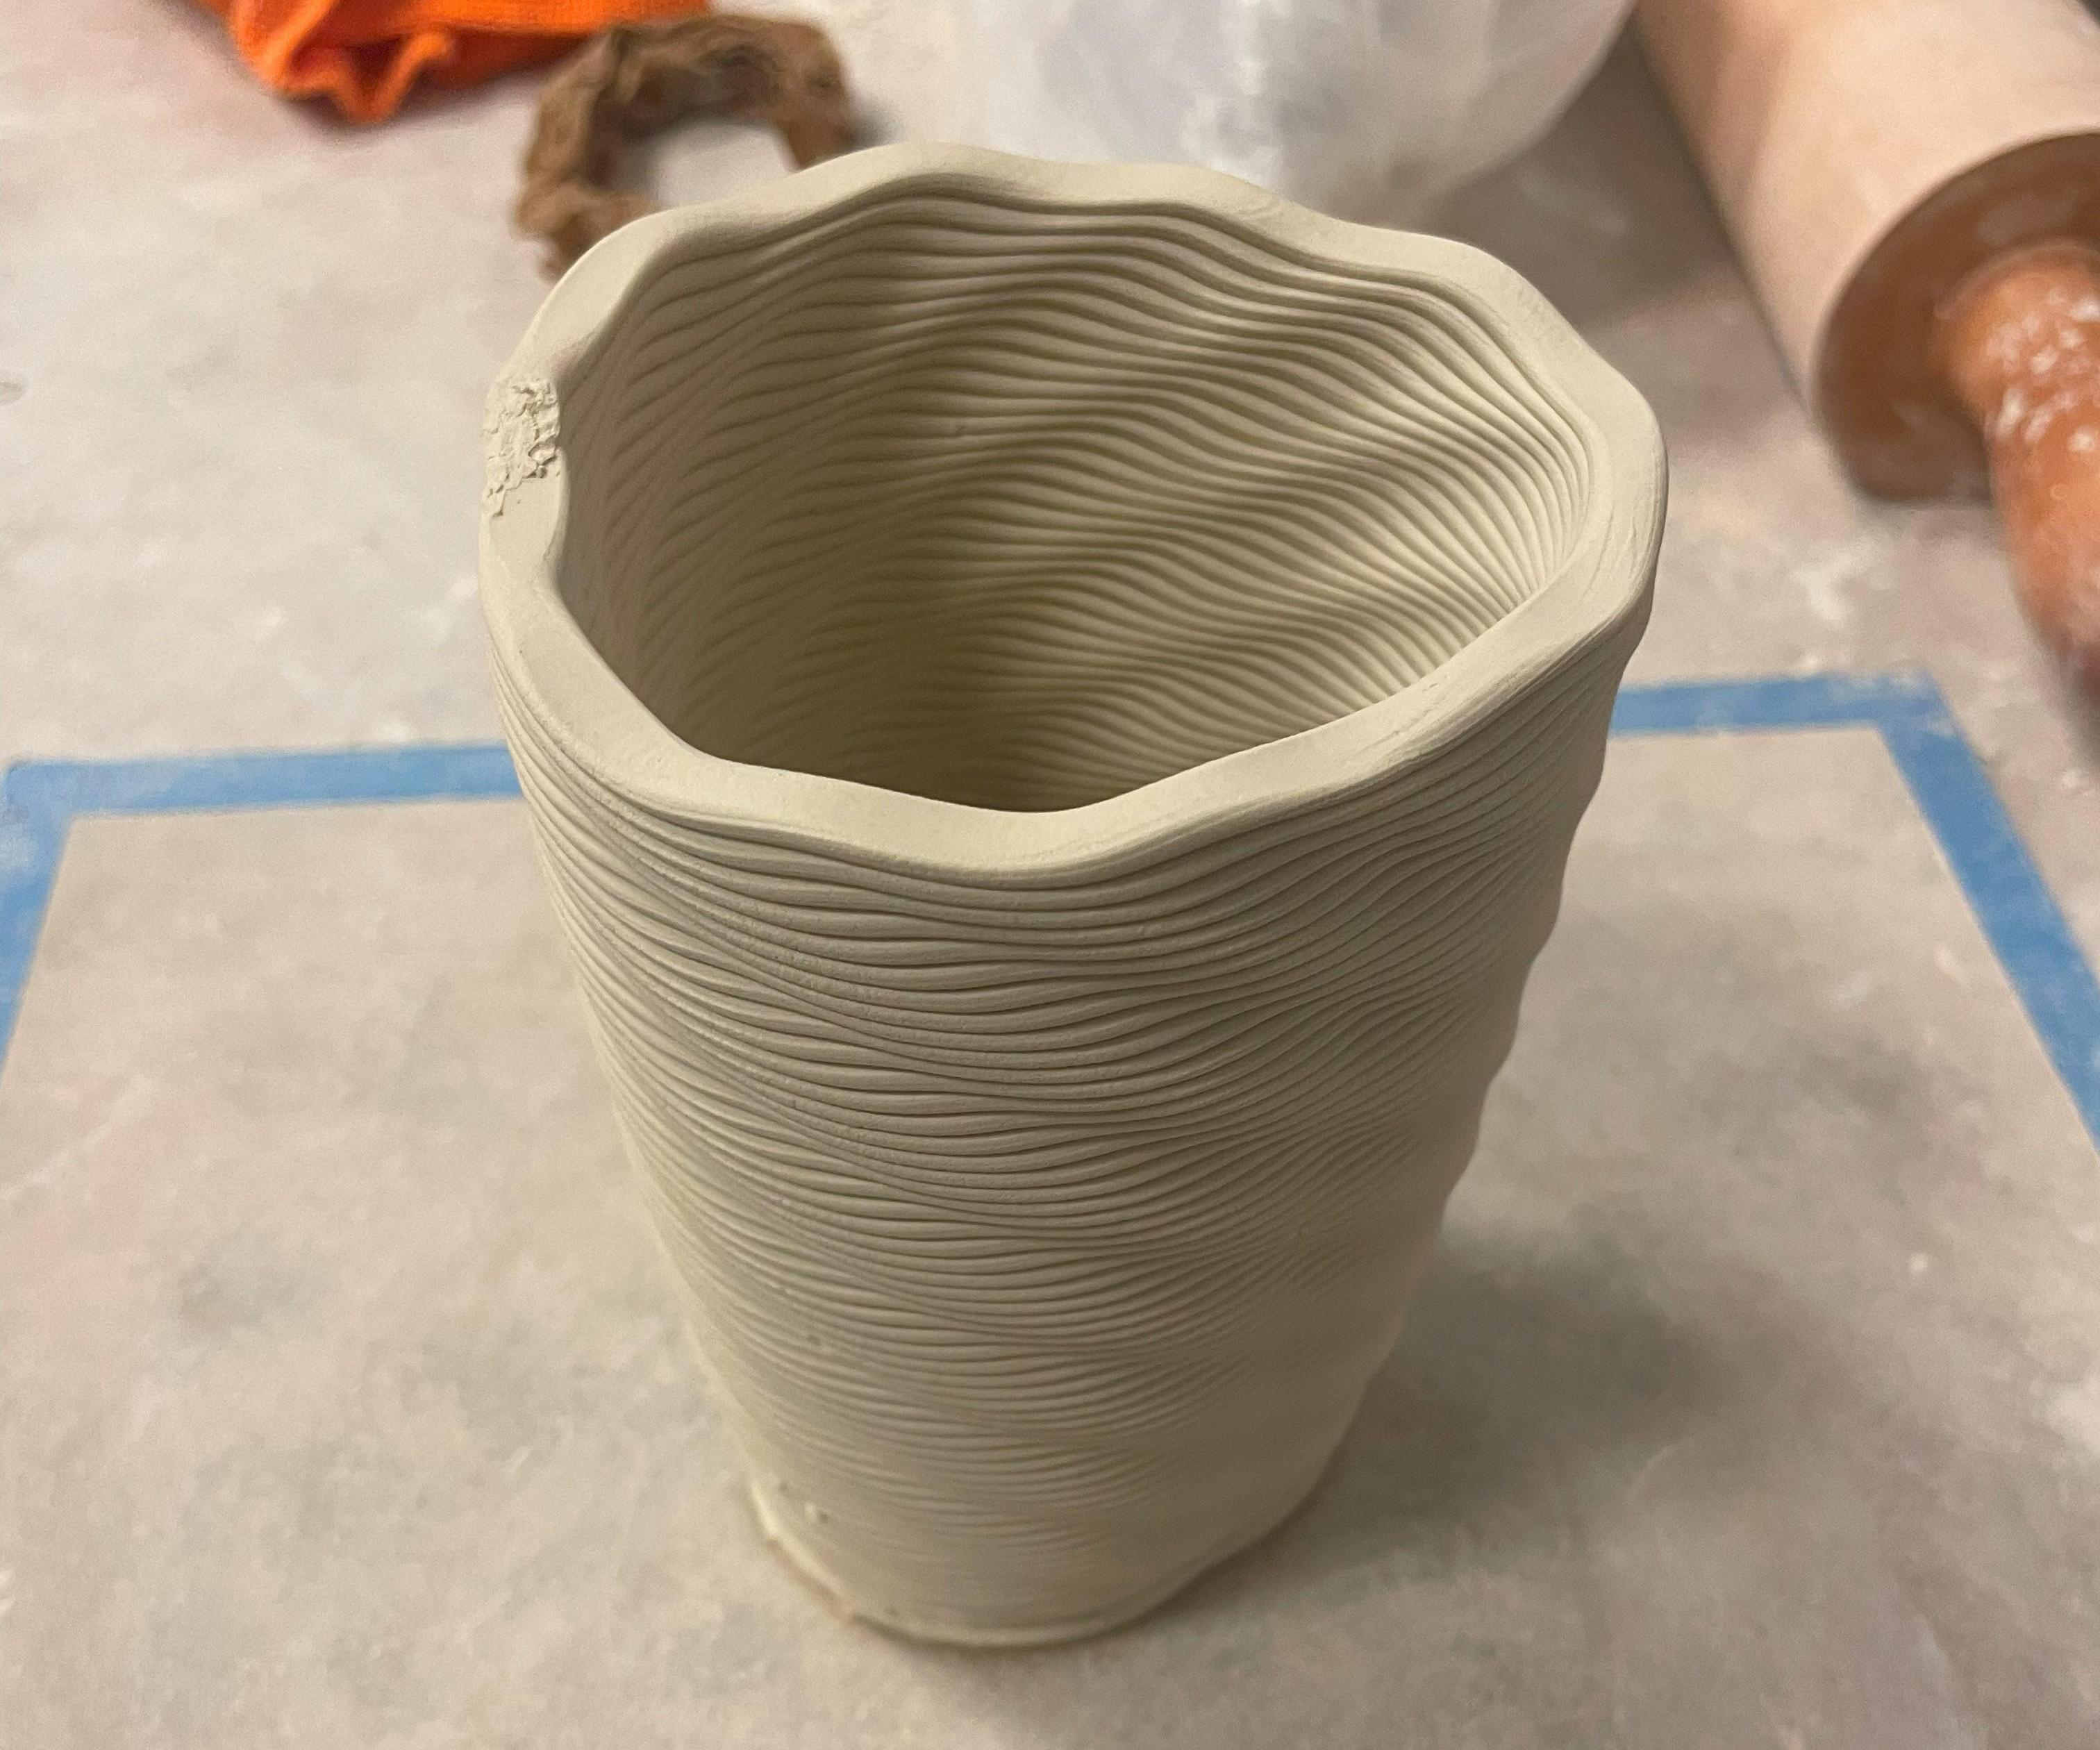 Week 6: 3D Printed Clay Cup (MAT238)